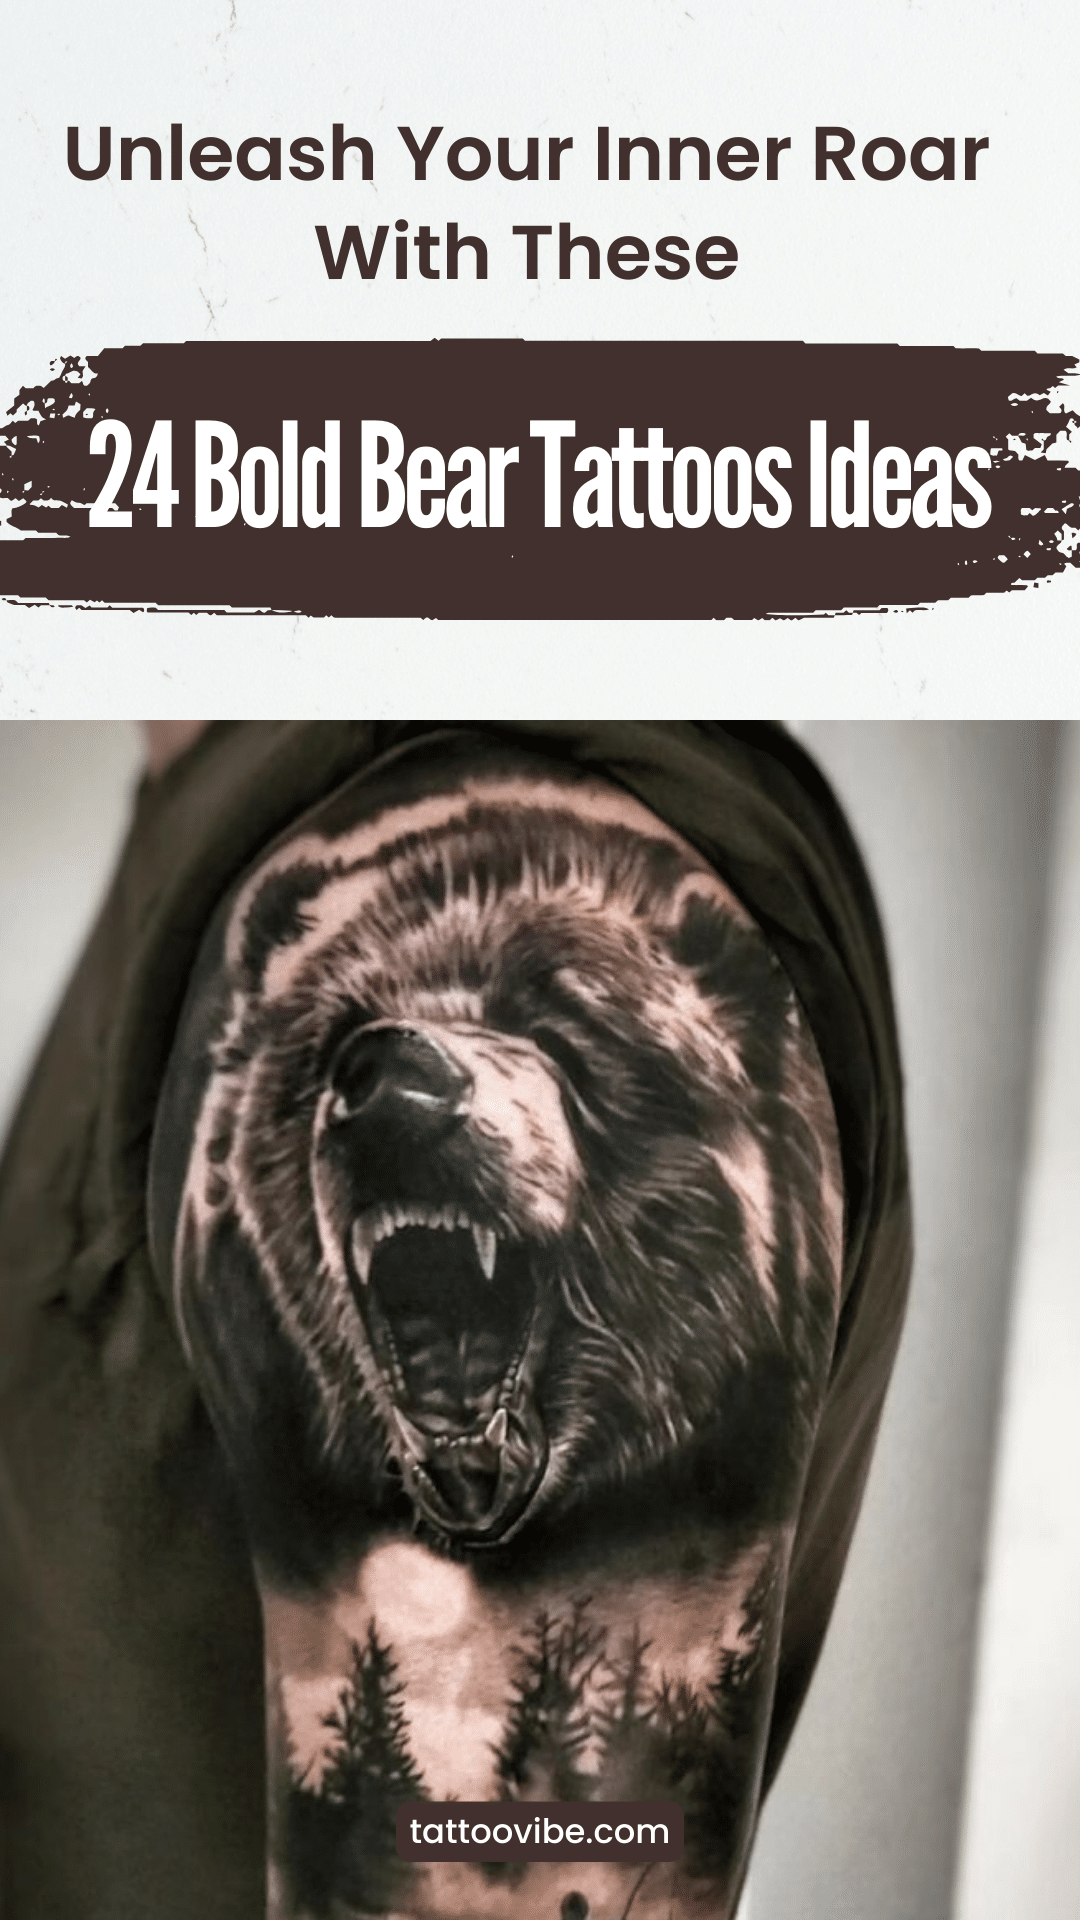 24 idee per tatuaggi di orsi audaci